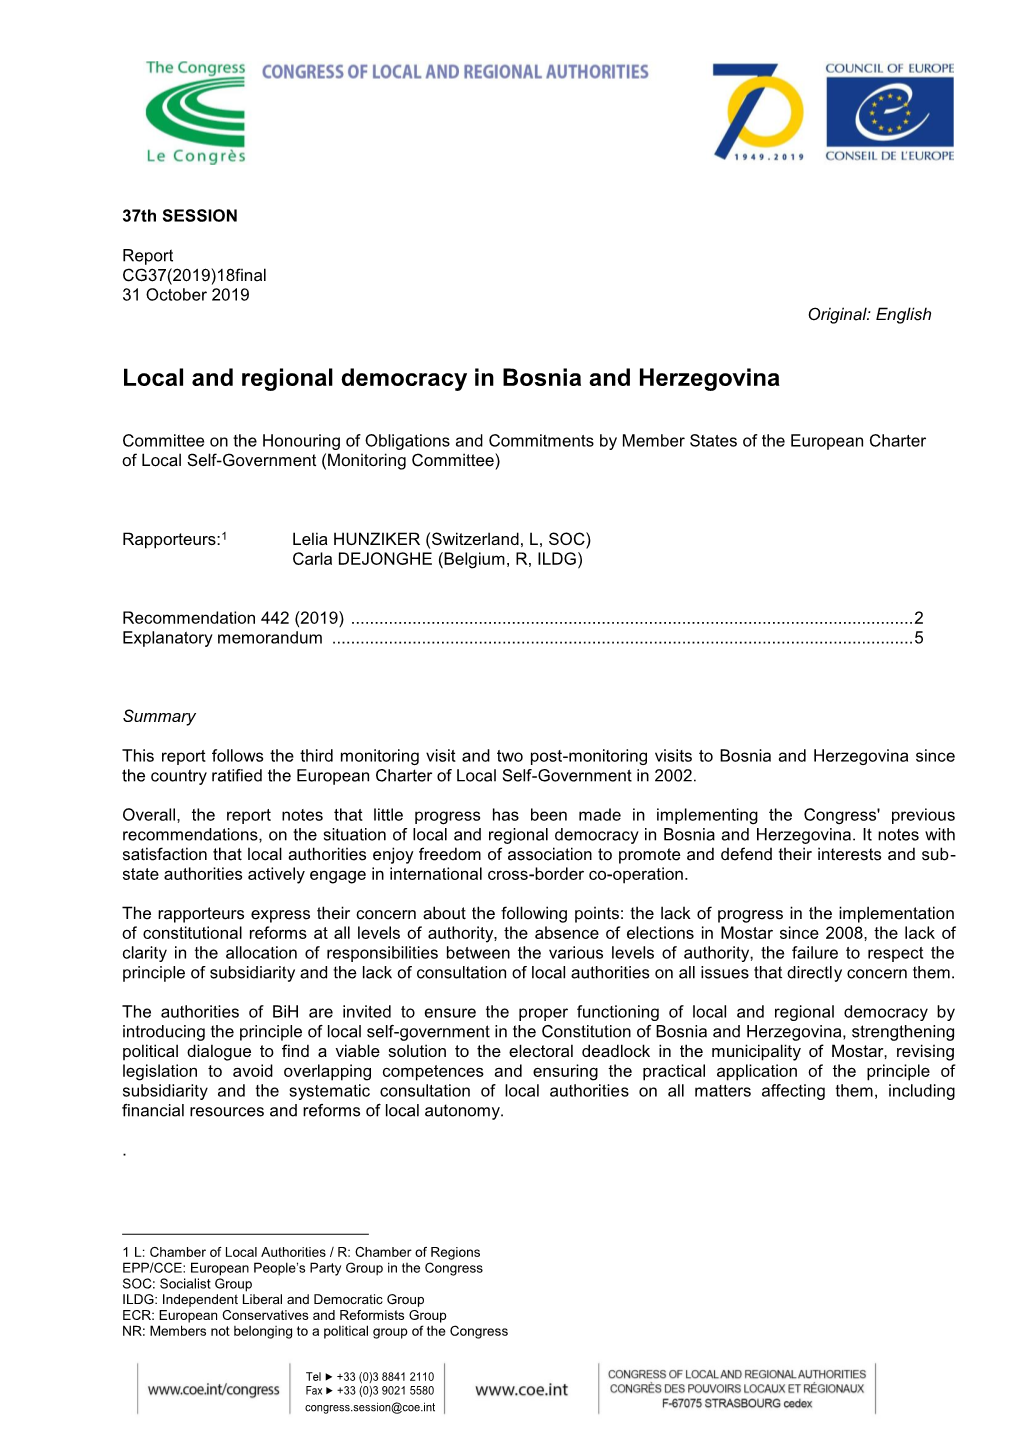 Local and Regional Democracy in Bosnia and Herzegovina